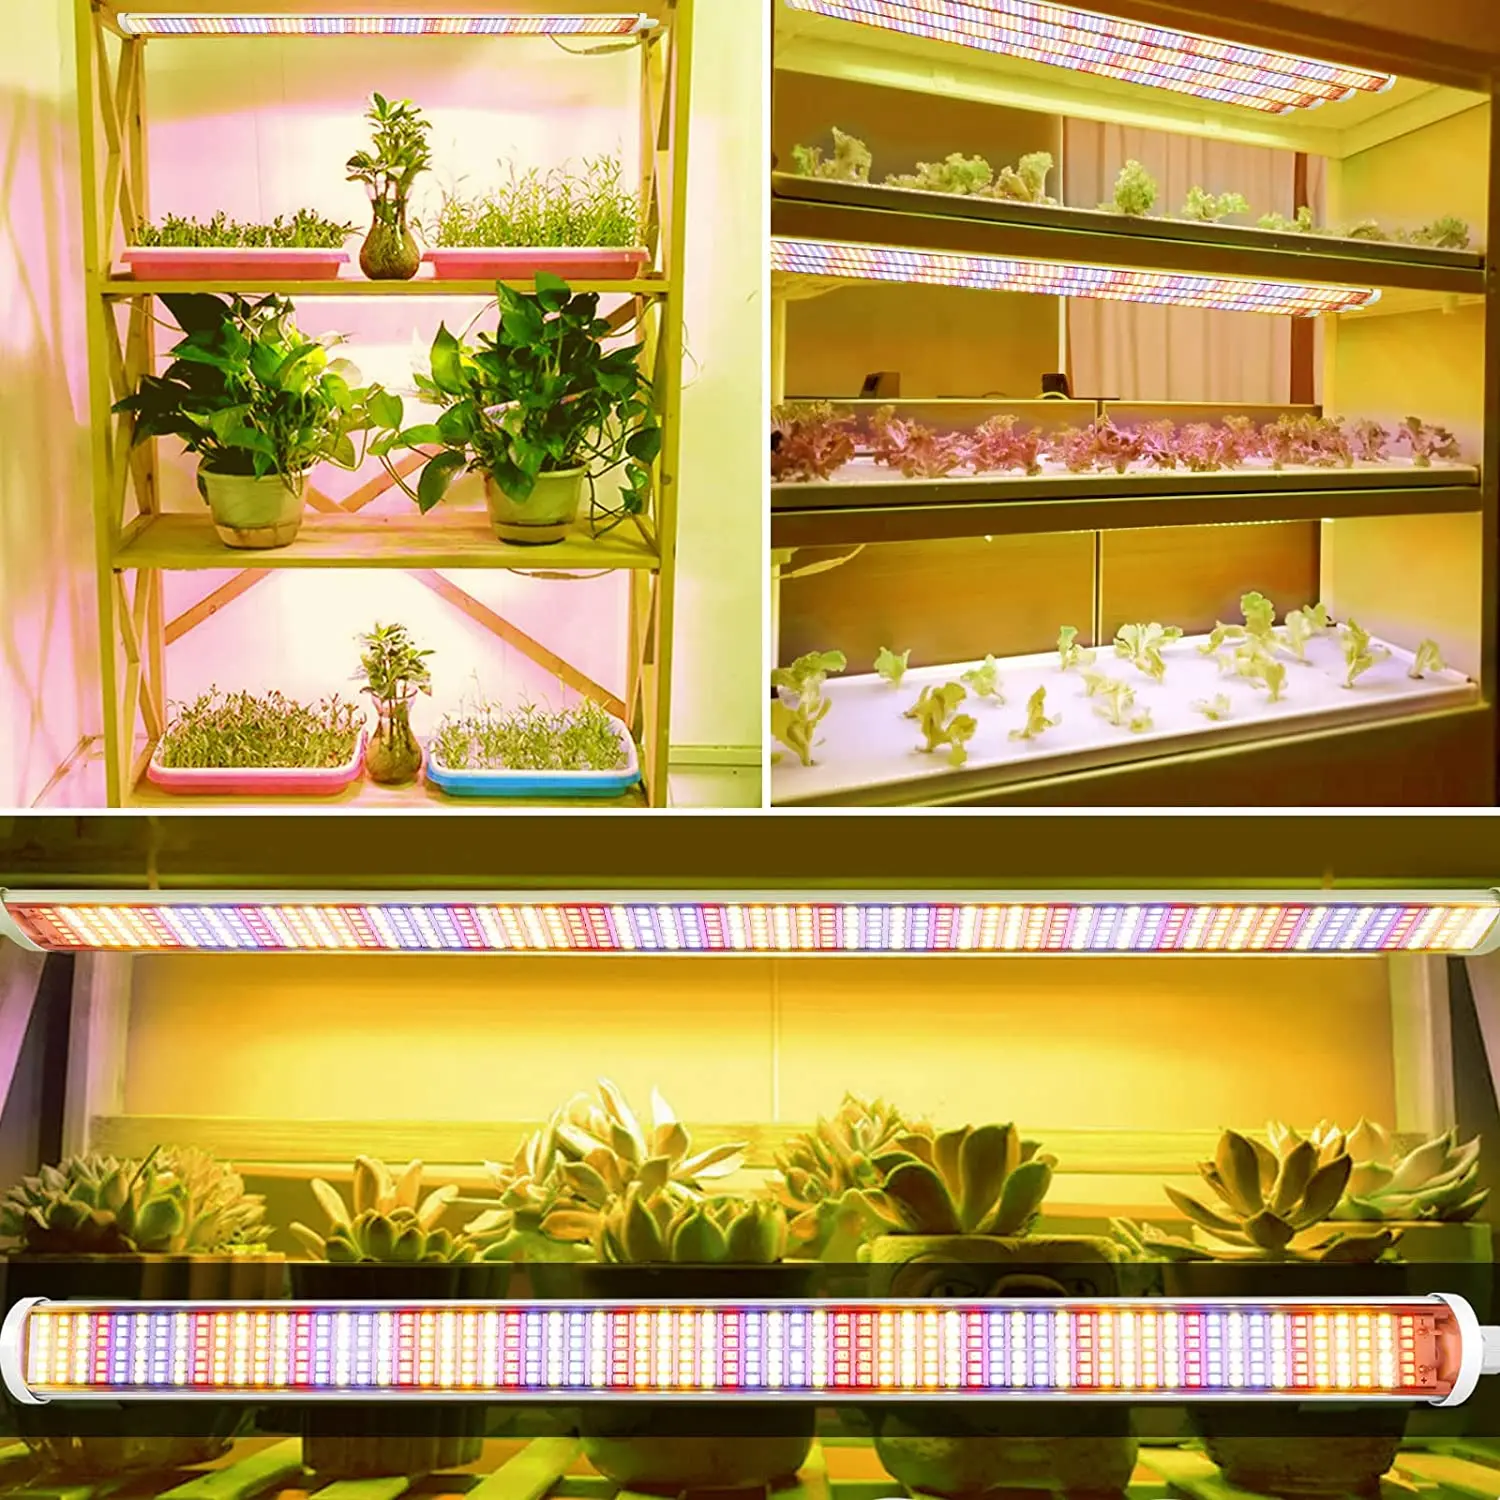 LED růst lehký 2 pack barů plný spektrum 390leds sazenice rostlina lampa časovač spínač pro growbox growtent hydroponie EU zátka